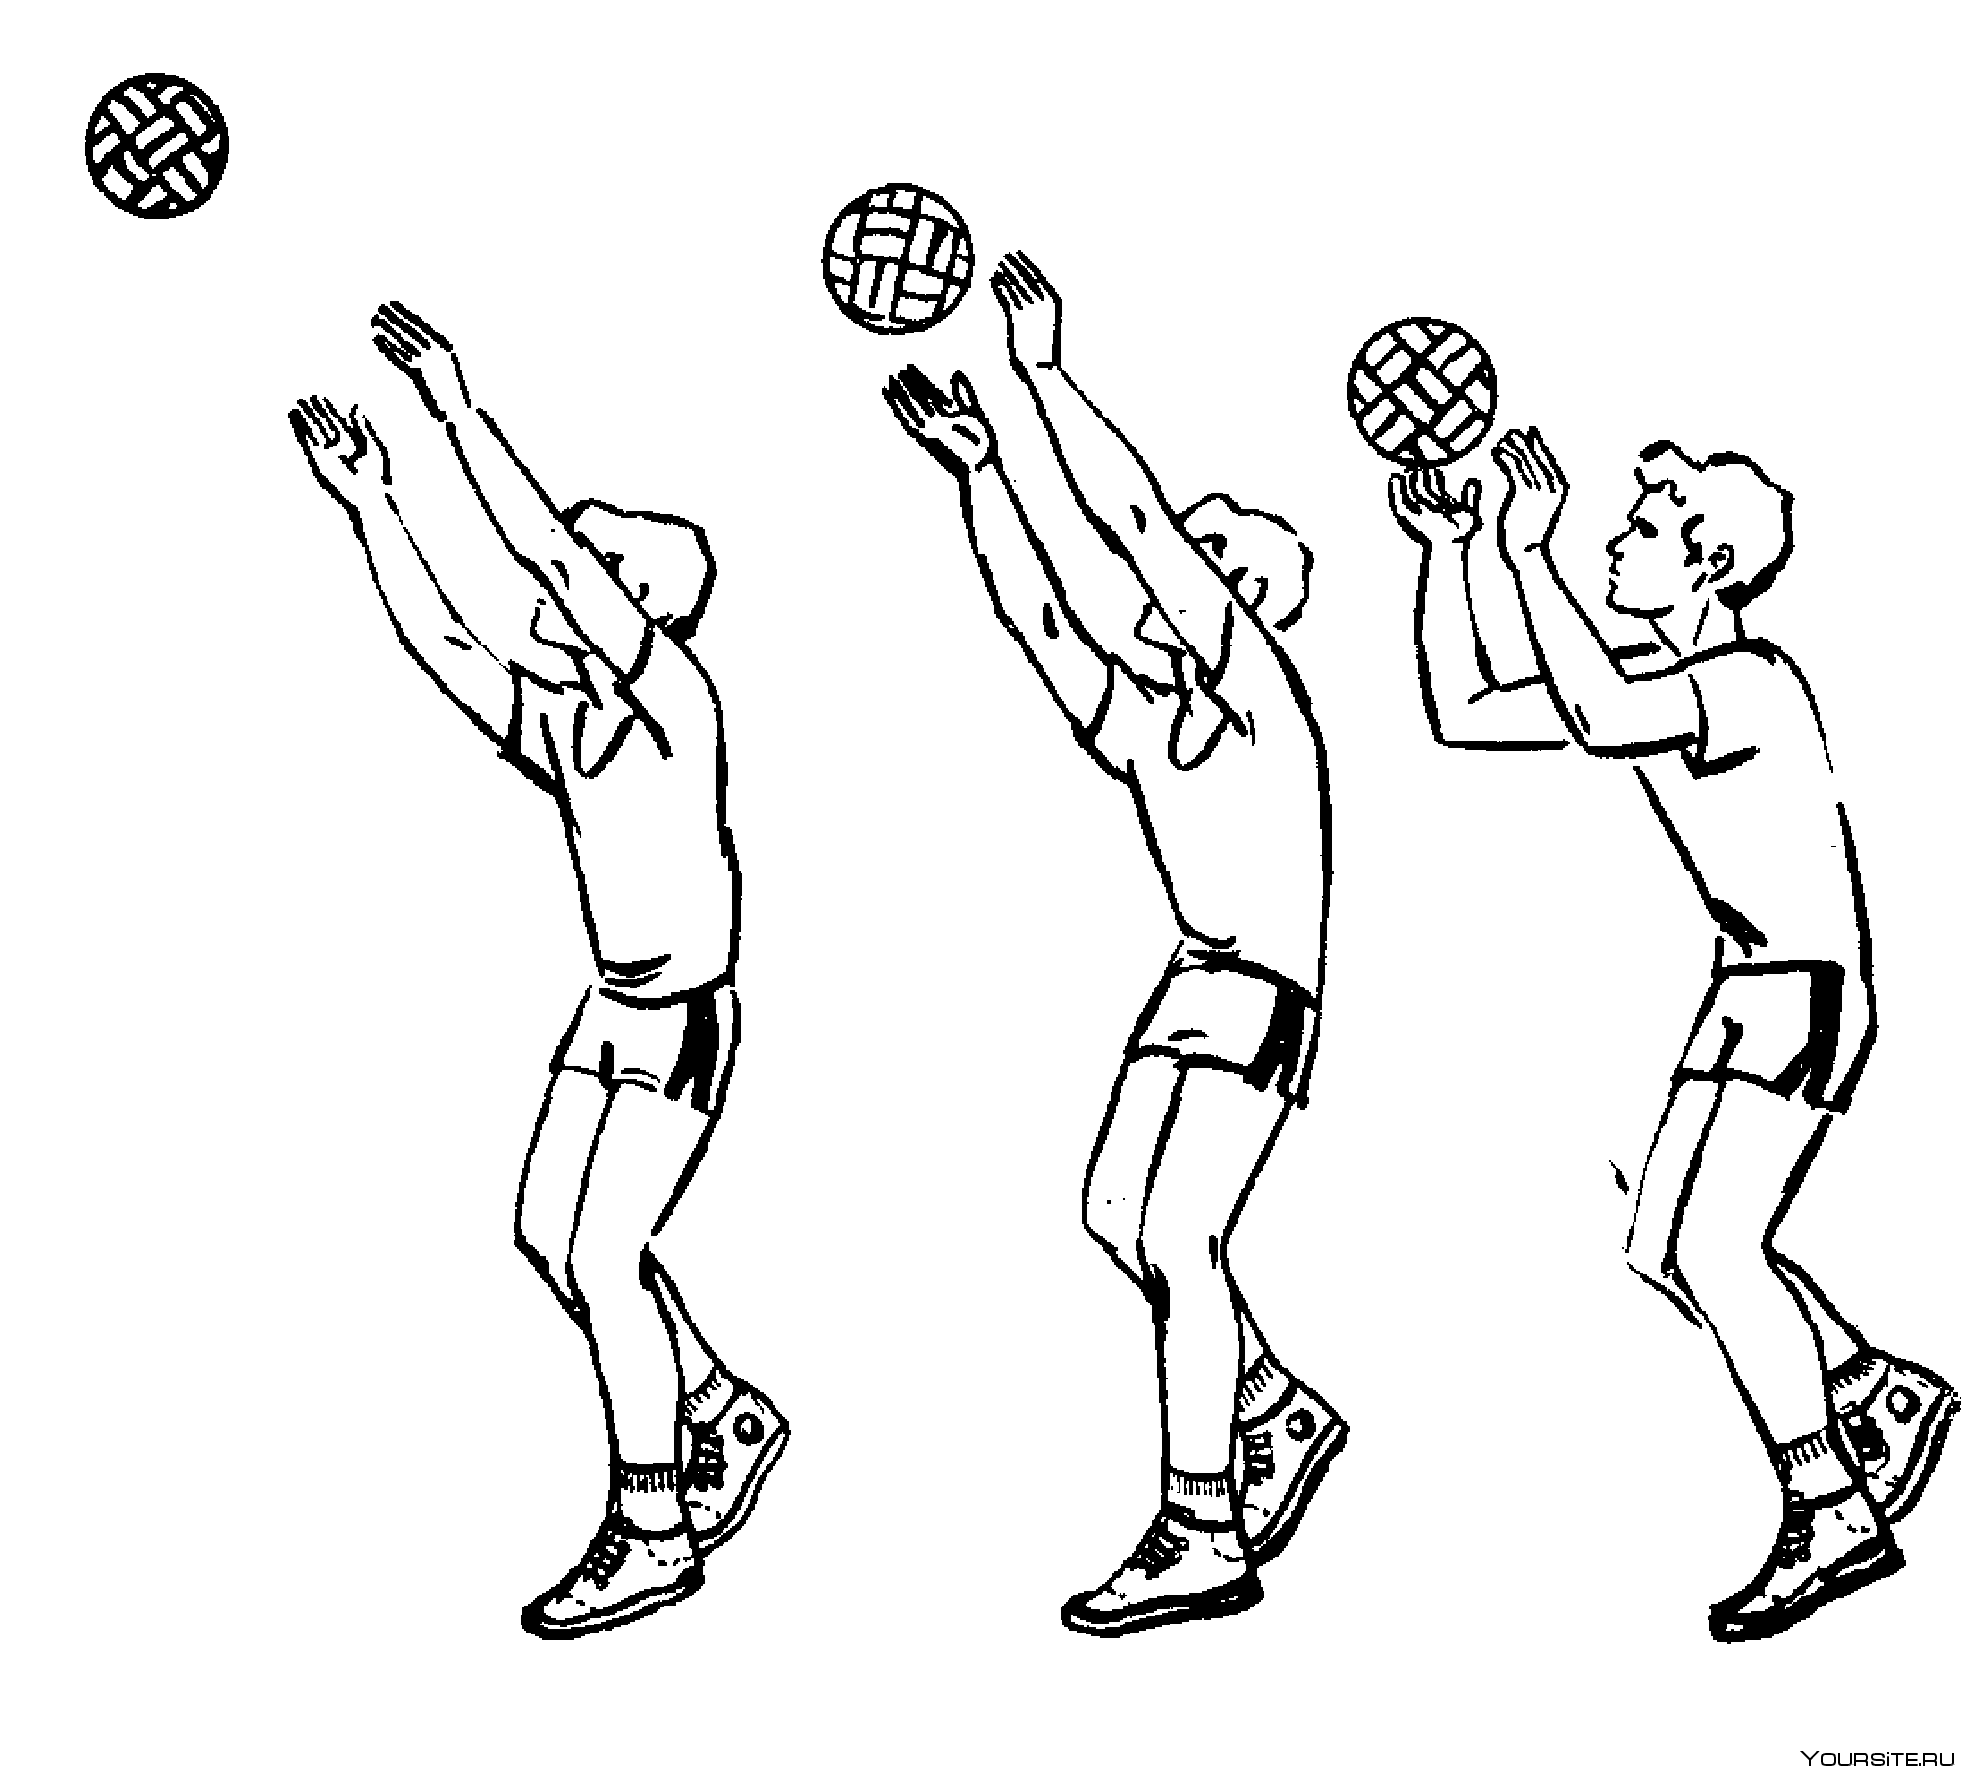 Передача мяча(сверху двумя руками ,снизу двумя руками в волейболе. Передача мяча сверху двумя руками в волейболе. Передача мяча 2 руками сверху в волейболе. Прием мяча снизу в баскетболе техника выполнения. Волейбол передача сверху и снизу